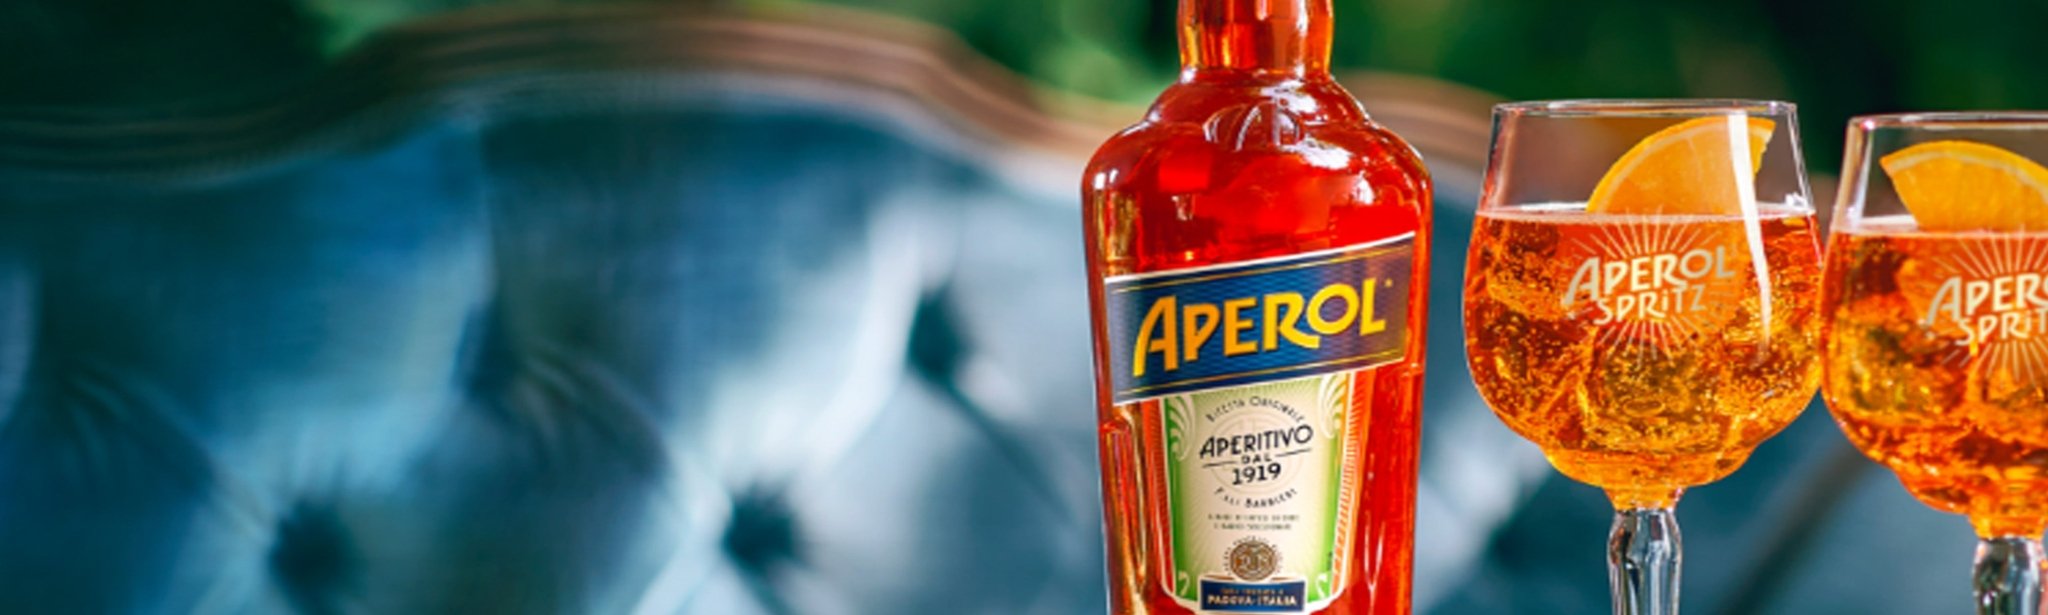 Aperol - The Bottle Club